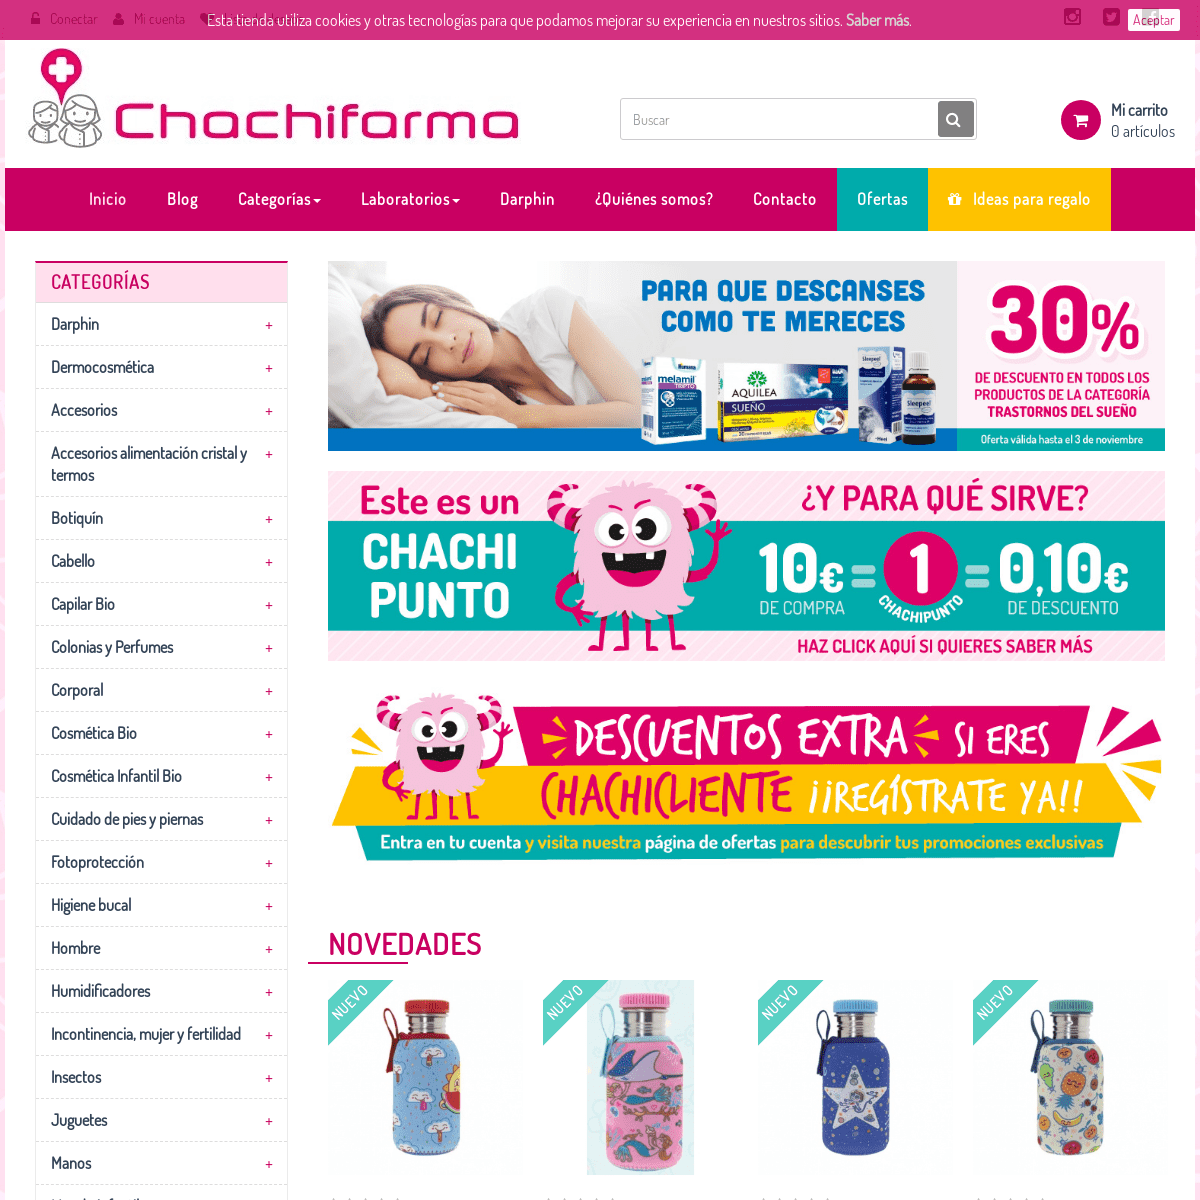 A complete backup of chachifarma.com